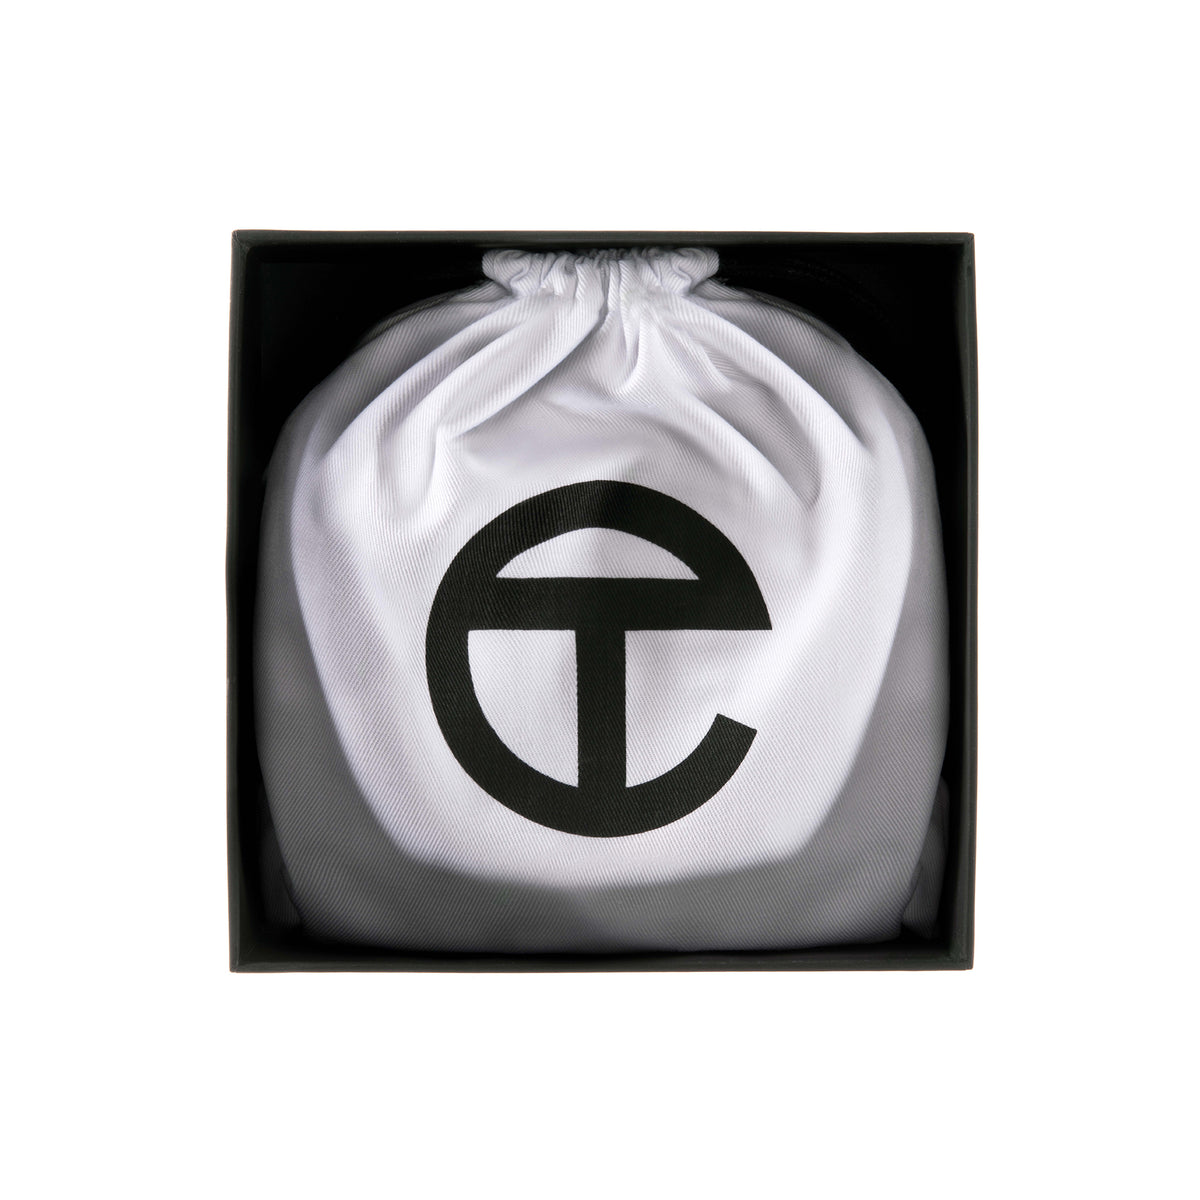 Logo Belt - Silver/Drab